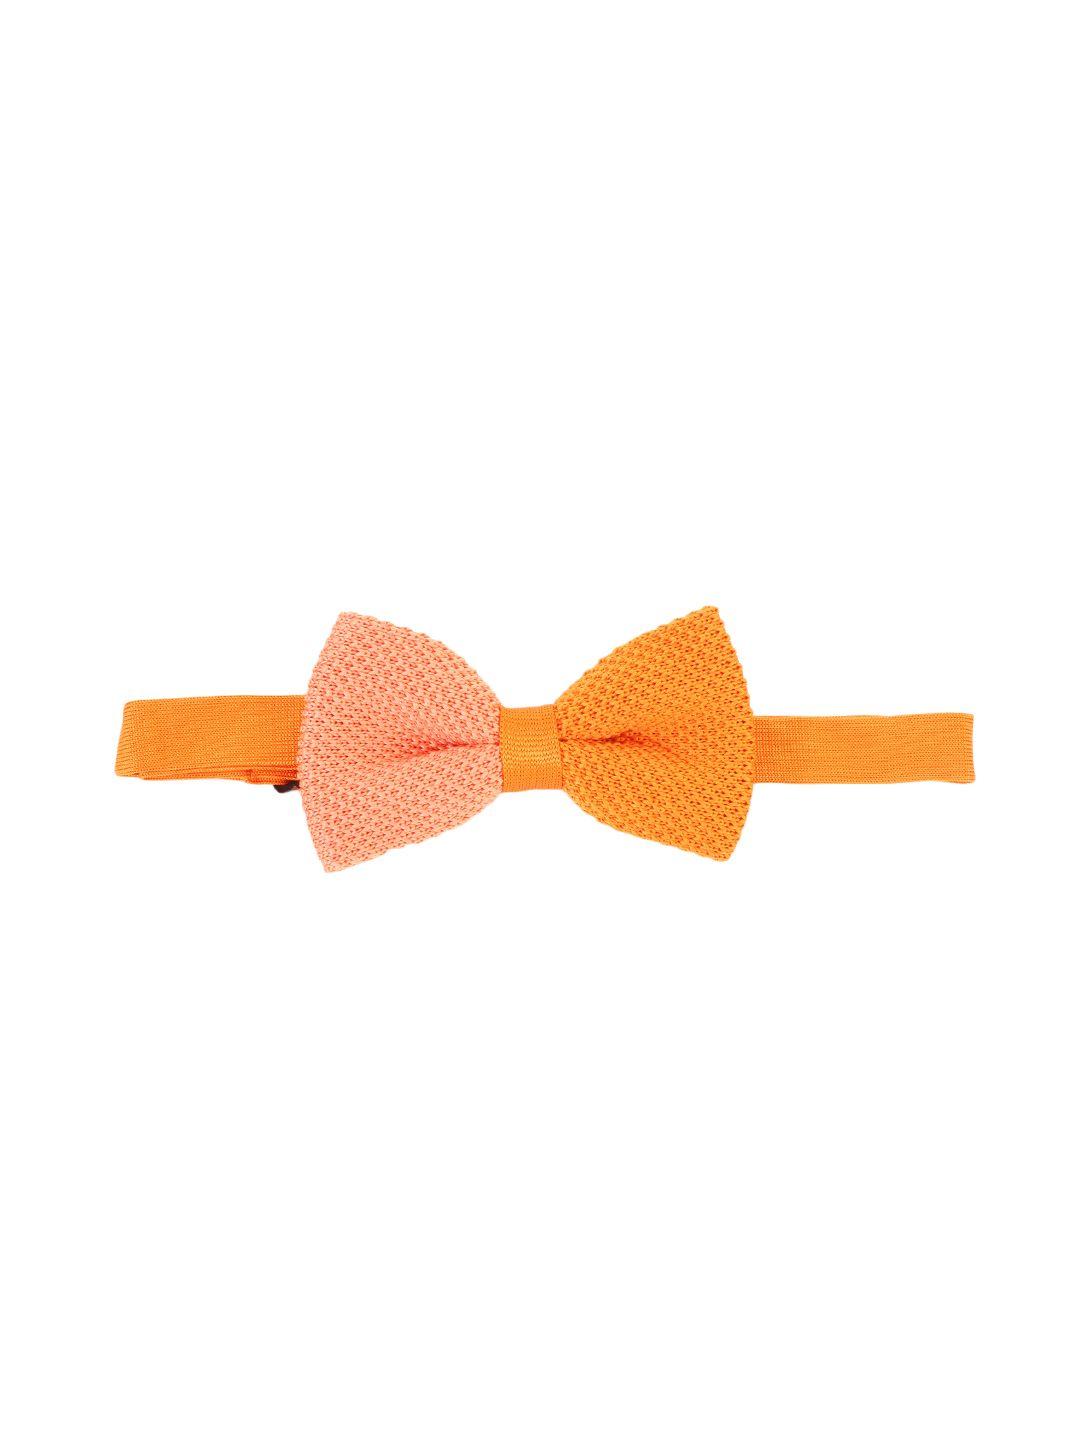 alvaro castagnino orange & peach-coloured colourblocked patterned bow tie